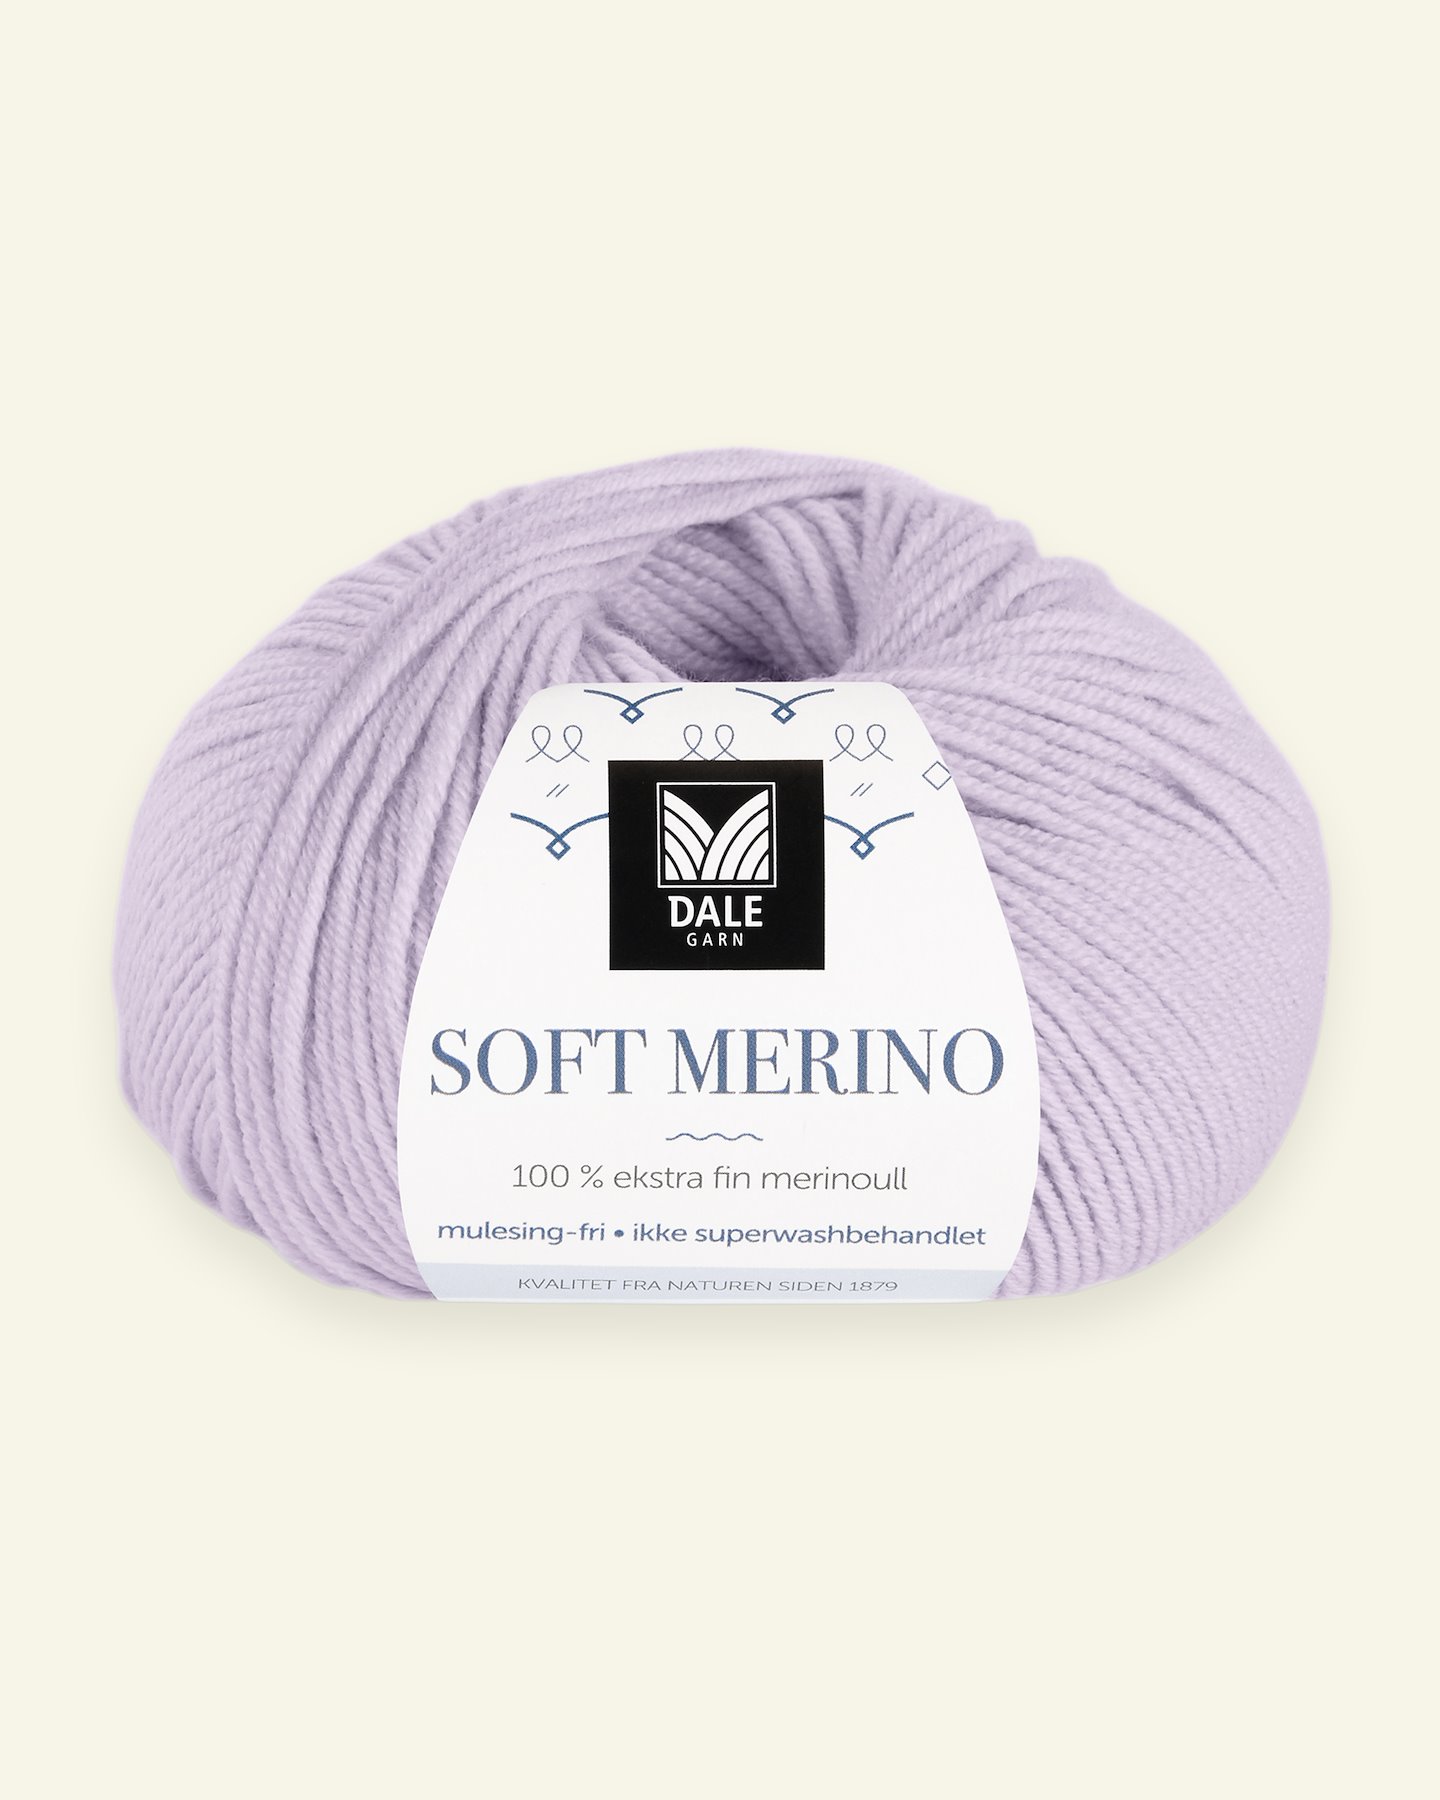 Dale Garn, 100% ekstra fint merinogarn "Soft Merino", Lys lilac (3039) 90000360_pack